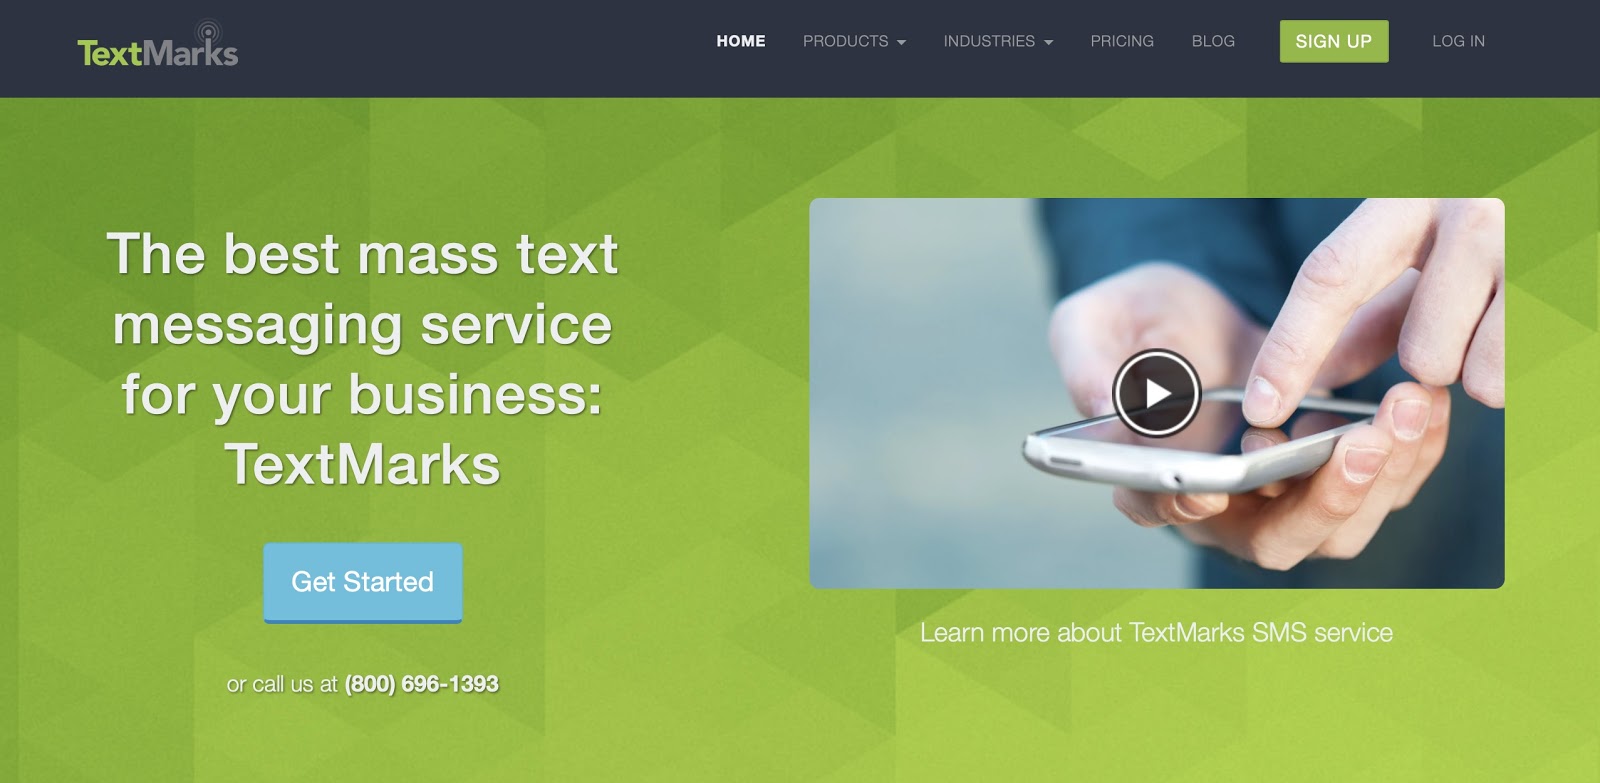 TextMarks SMS Marketing